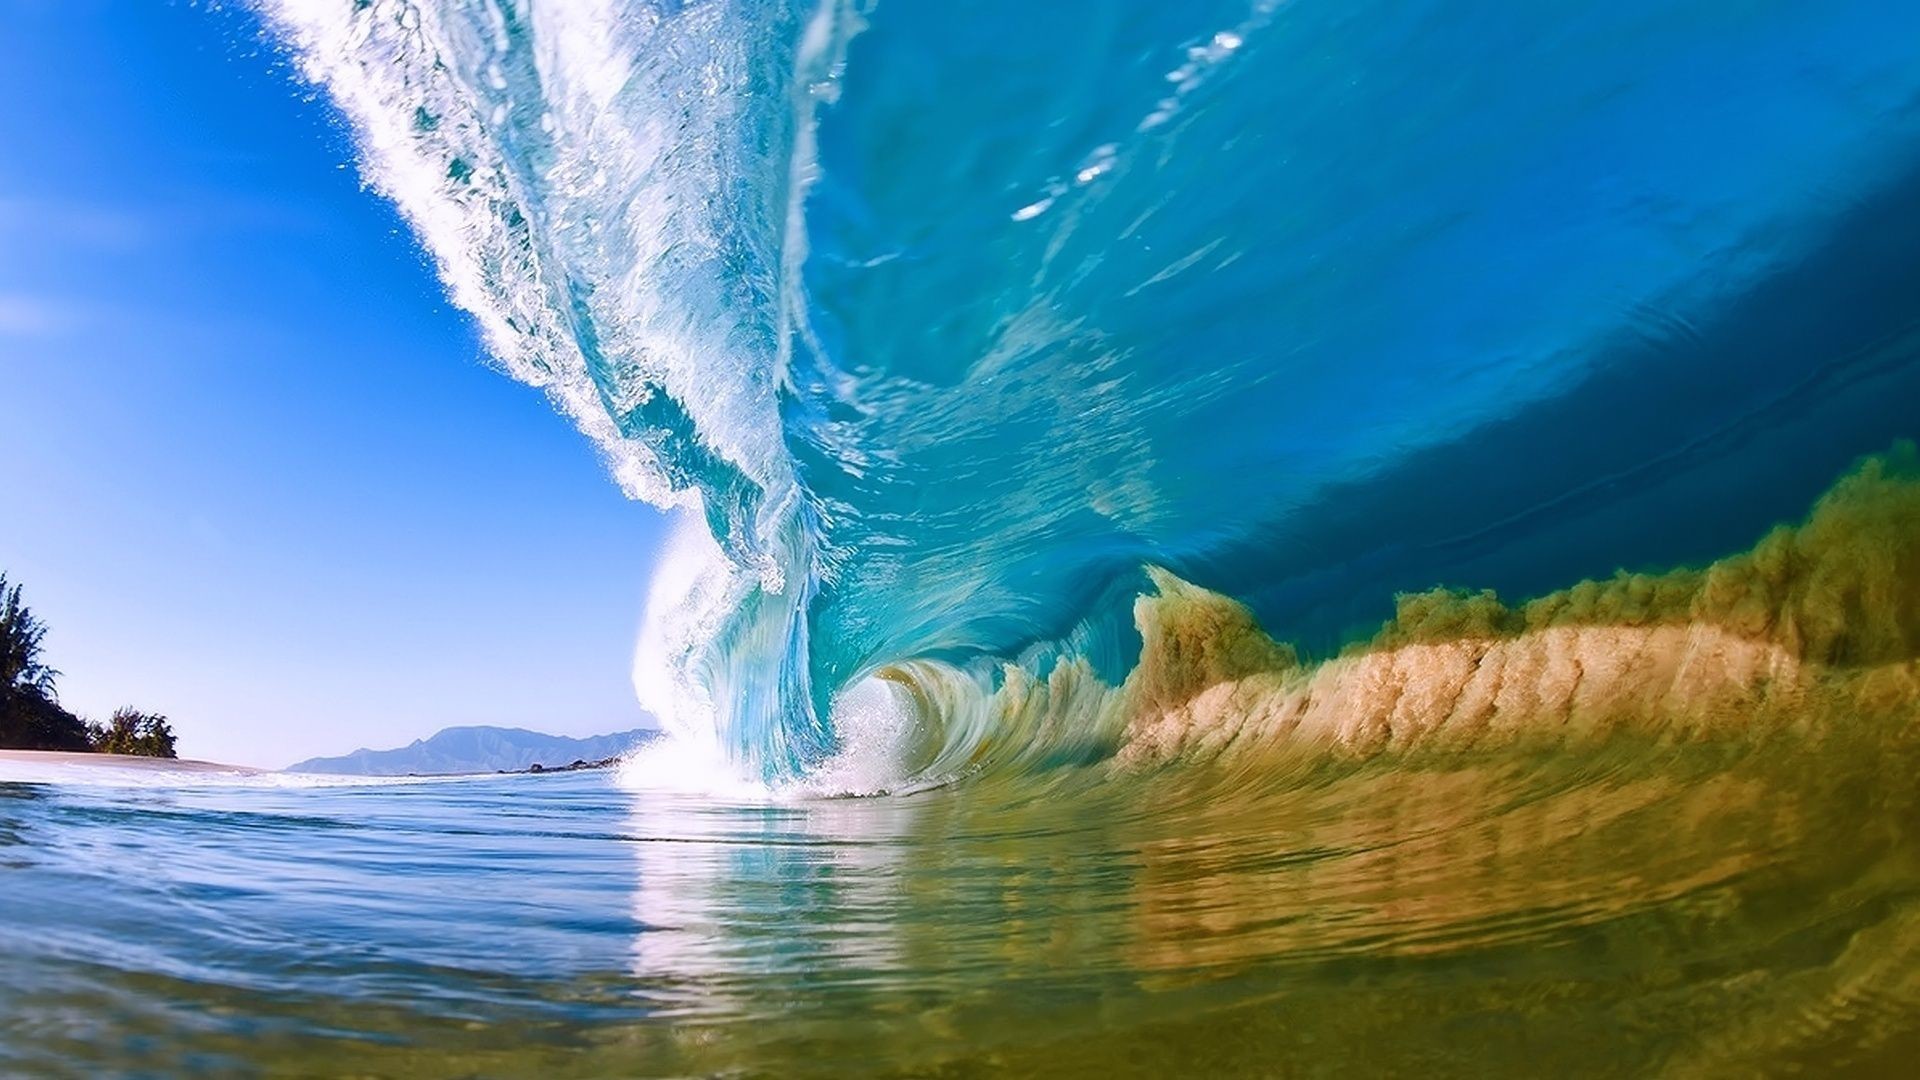 1920x1080 3840x2160 Blue Ocean Waves 4K Wallpaper Download Blue Ocean Waves 4K  Wallpaper Download